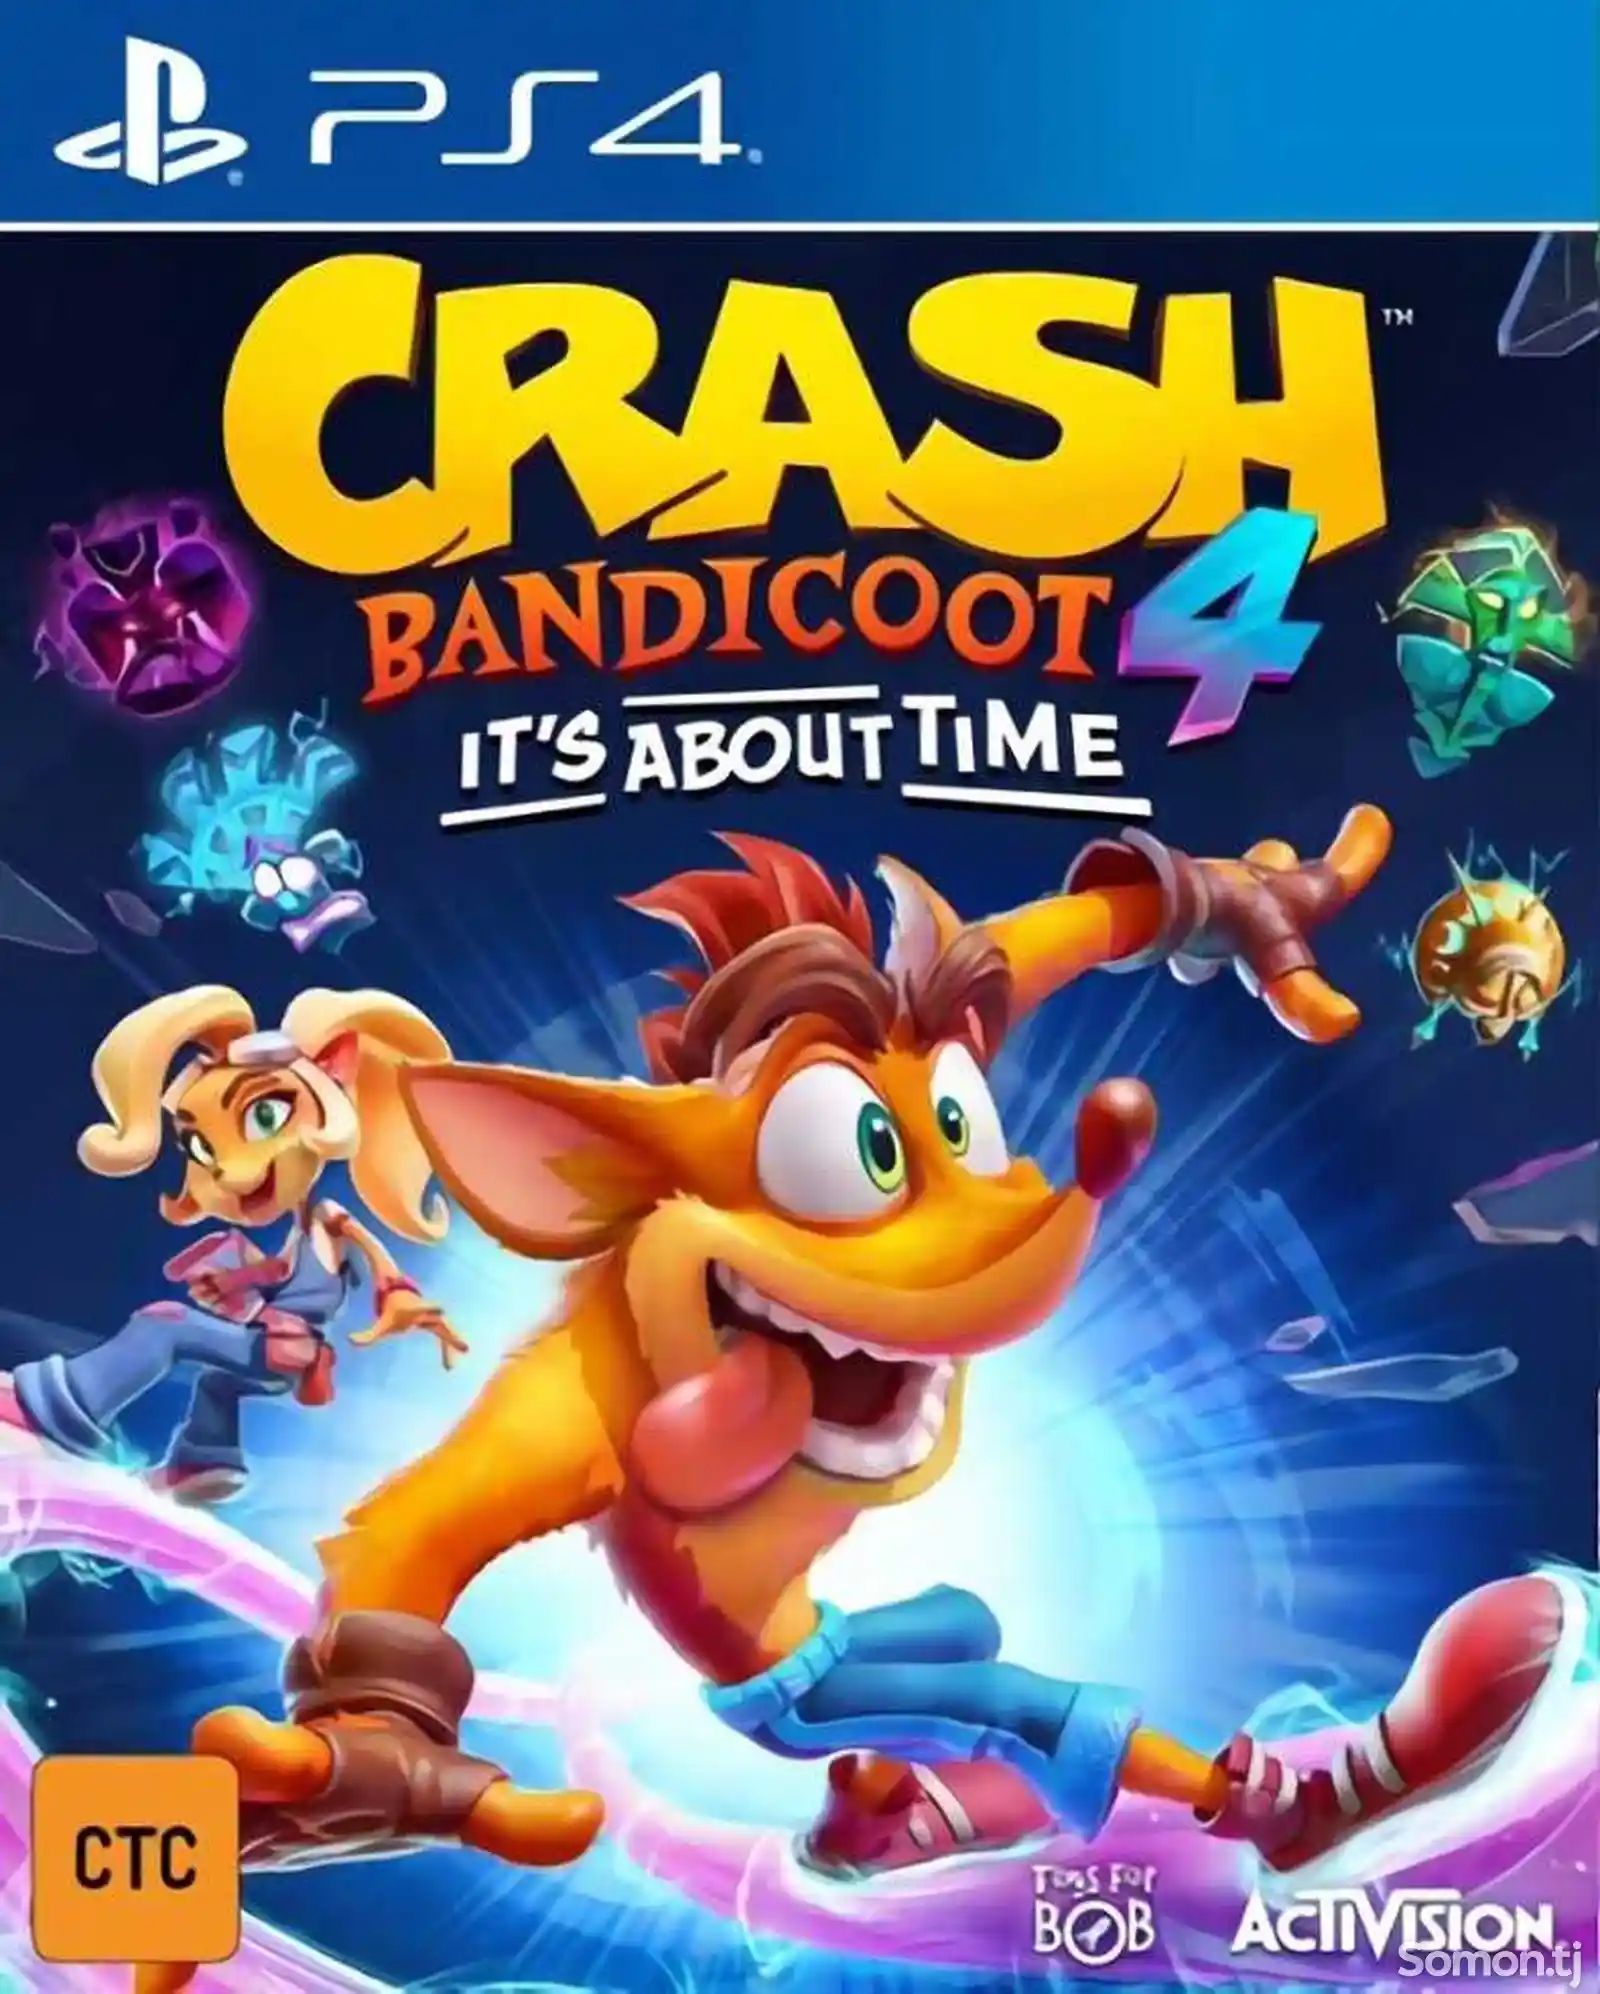 Игра Crash bandicoot 4 its about PS-4 / 5.05 / 6.72 / 7.02 / 7.55 / 9.00 /-1